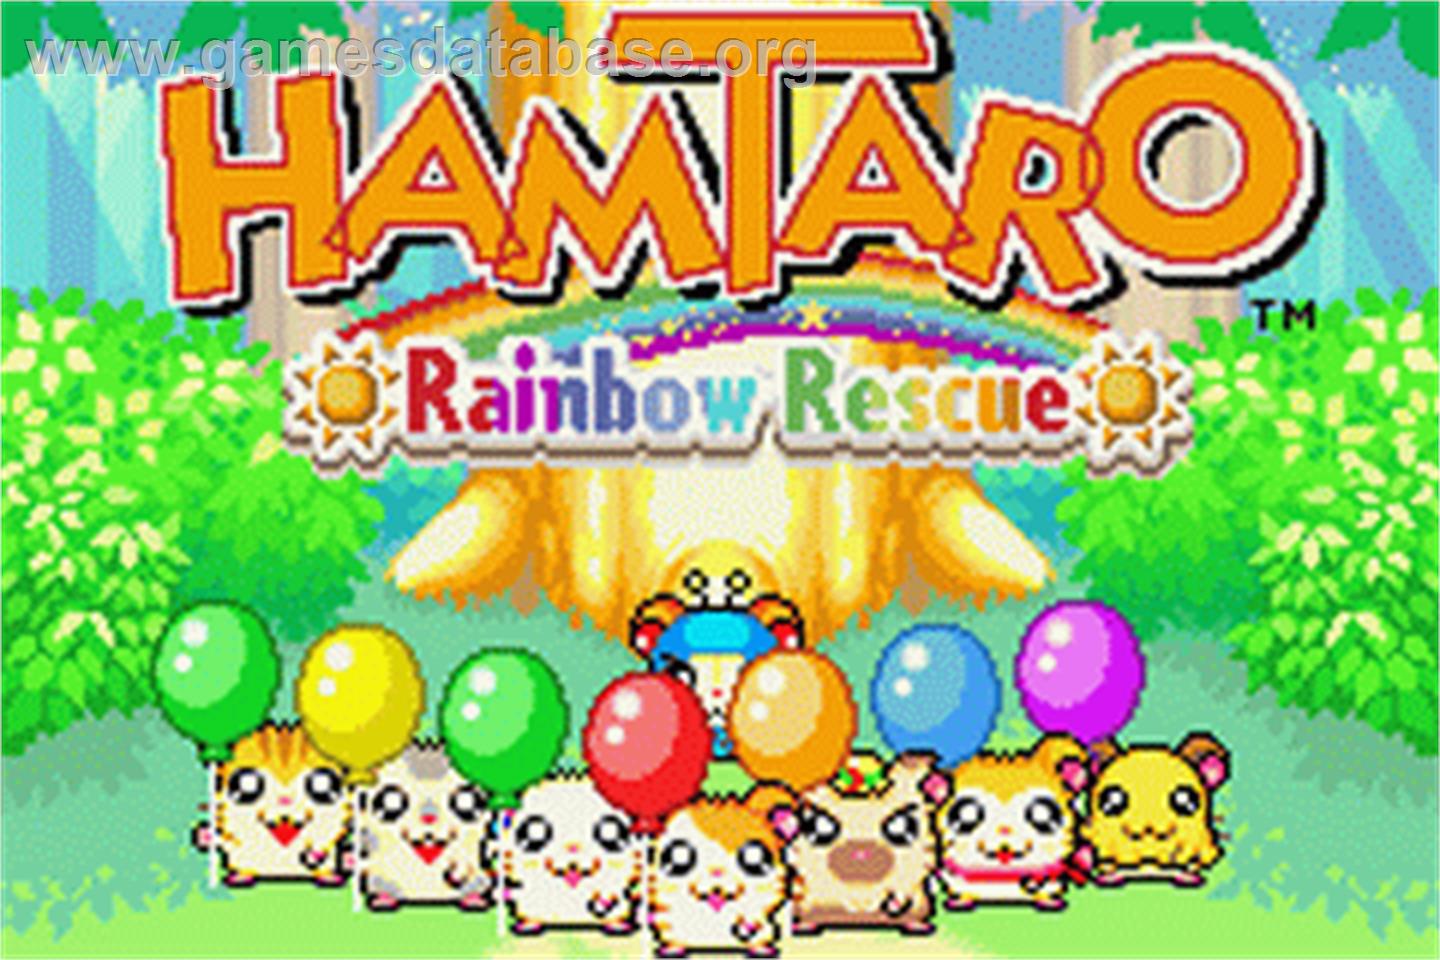 Hamtaro Rainbow Rescue - Nintendo Game Boy Advance - Artwork - Title Screen